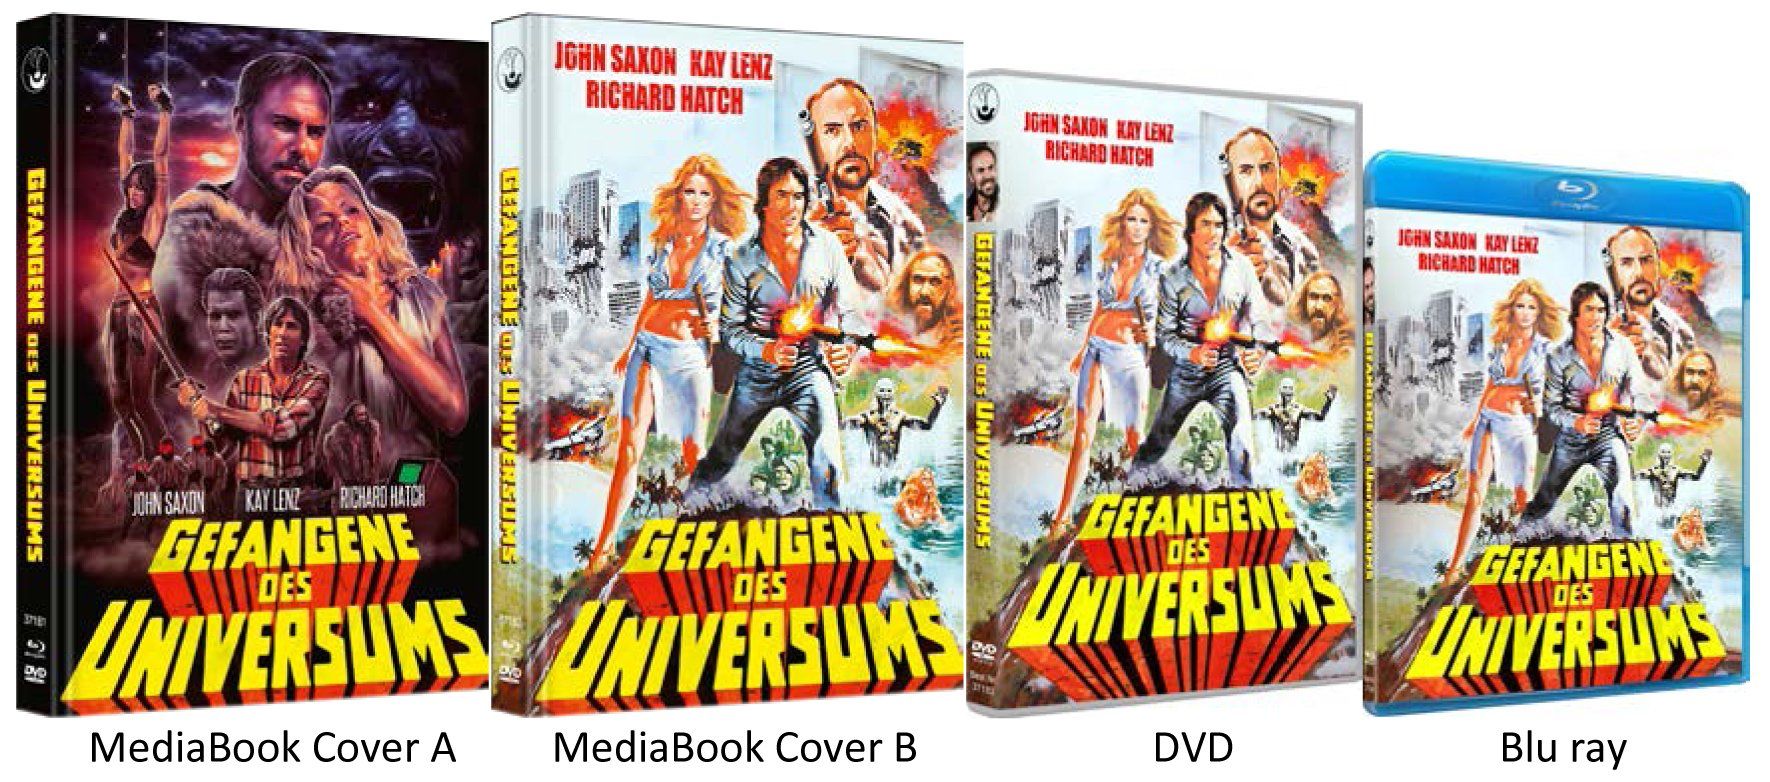 MediaBook DVD Blu ray Gefangene des Universums